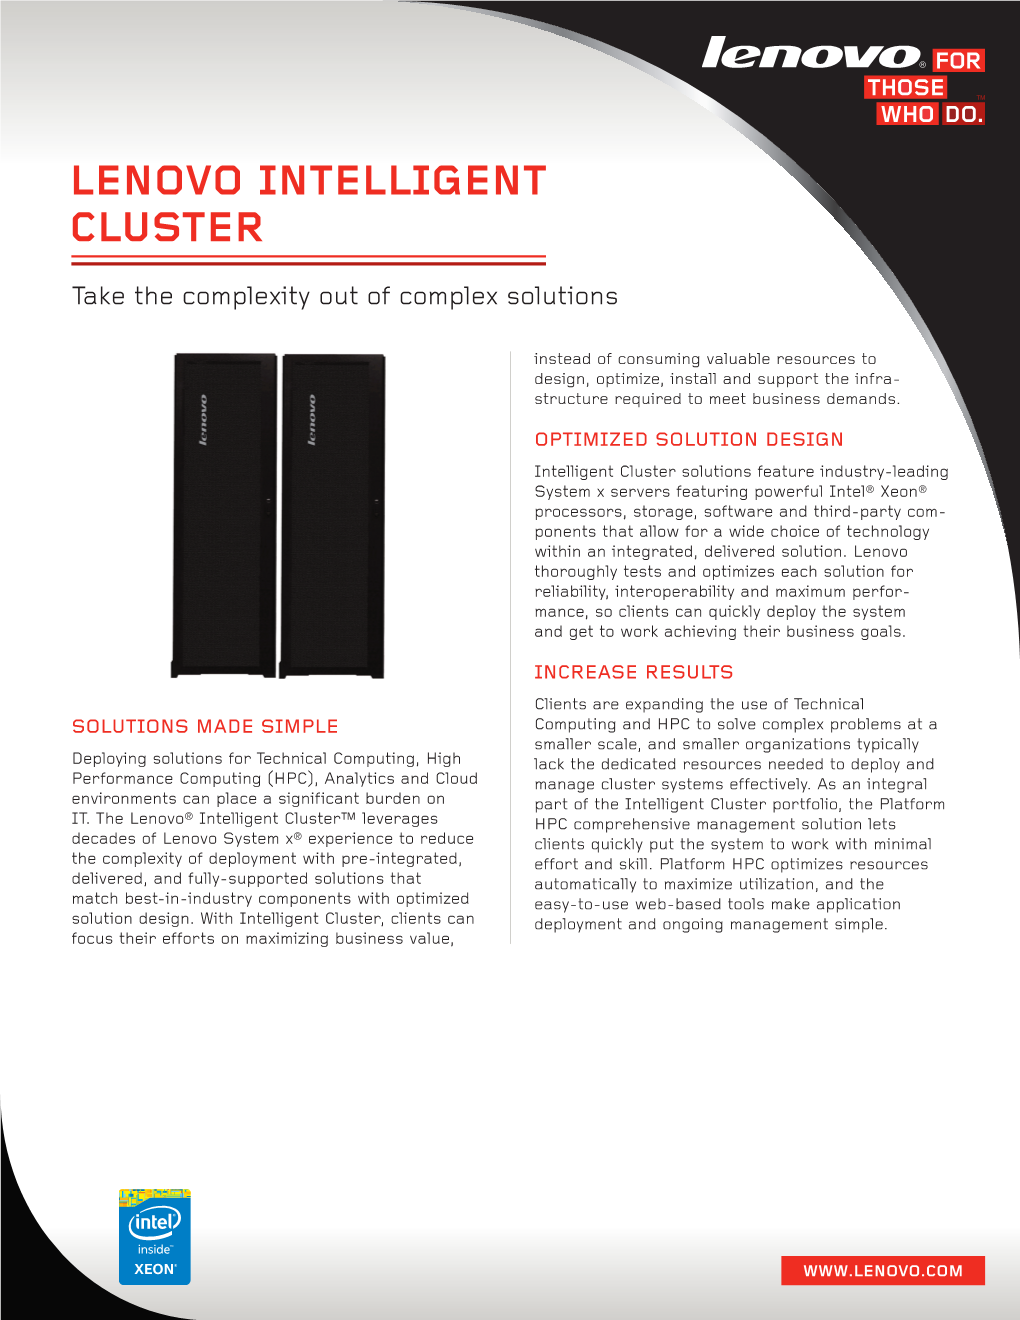 Lenovo Intelligent Cluster